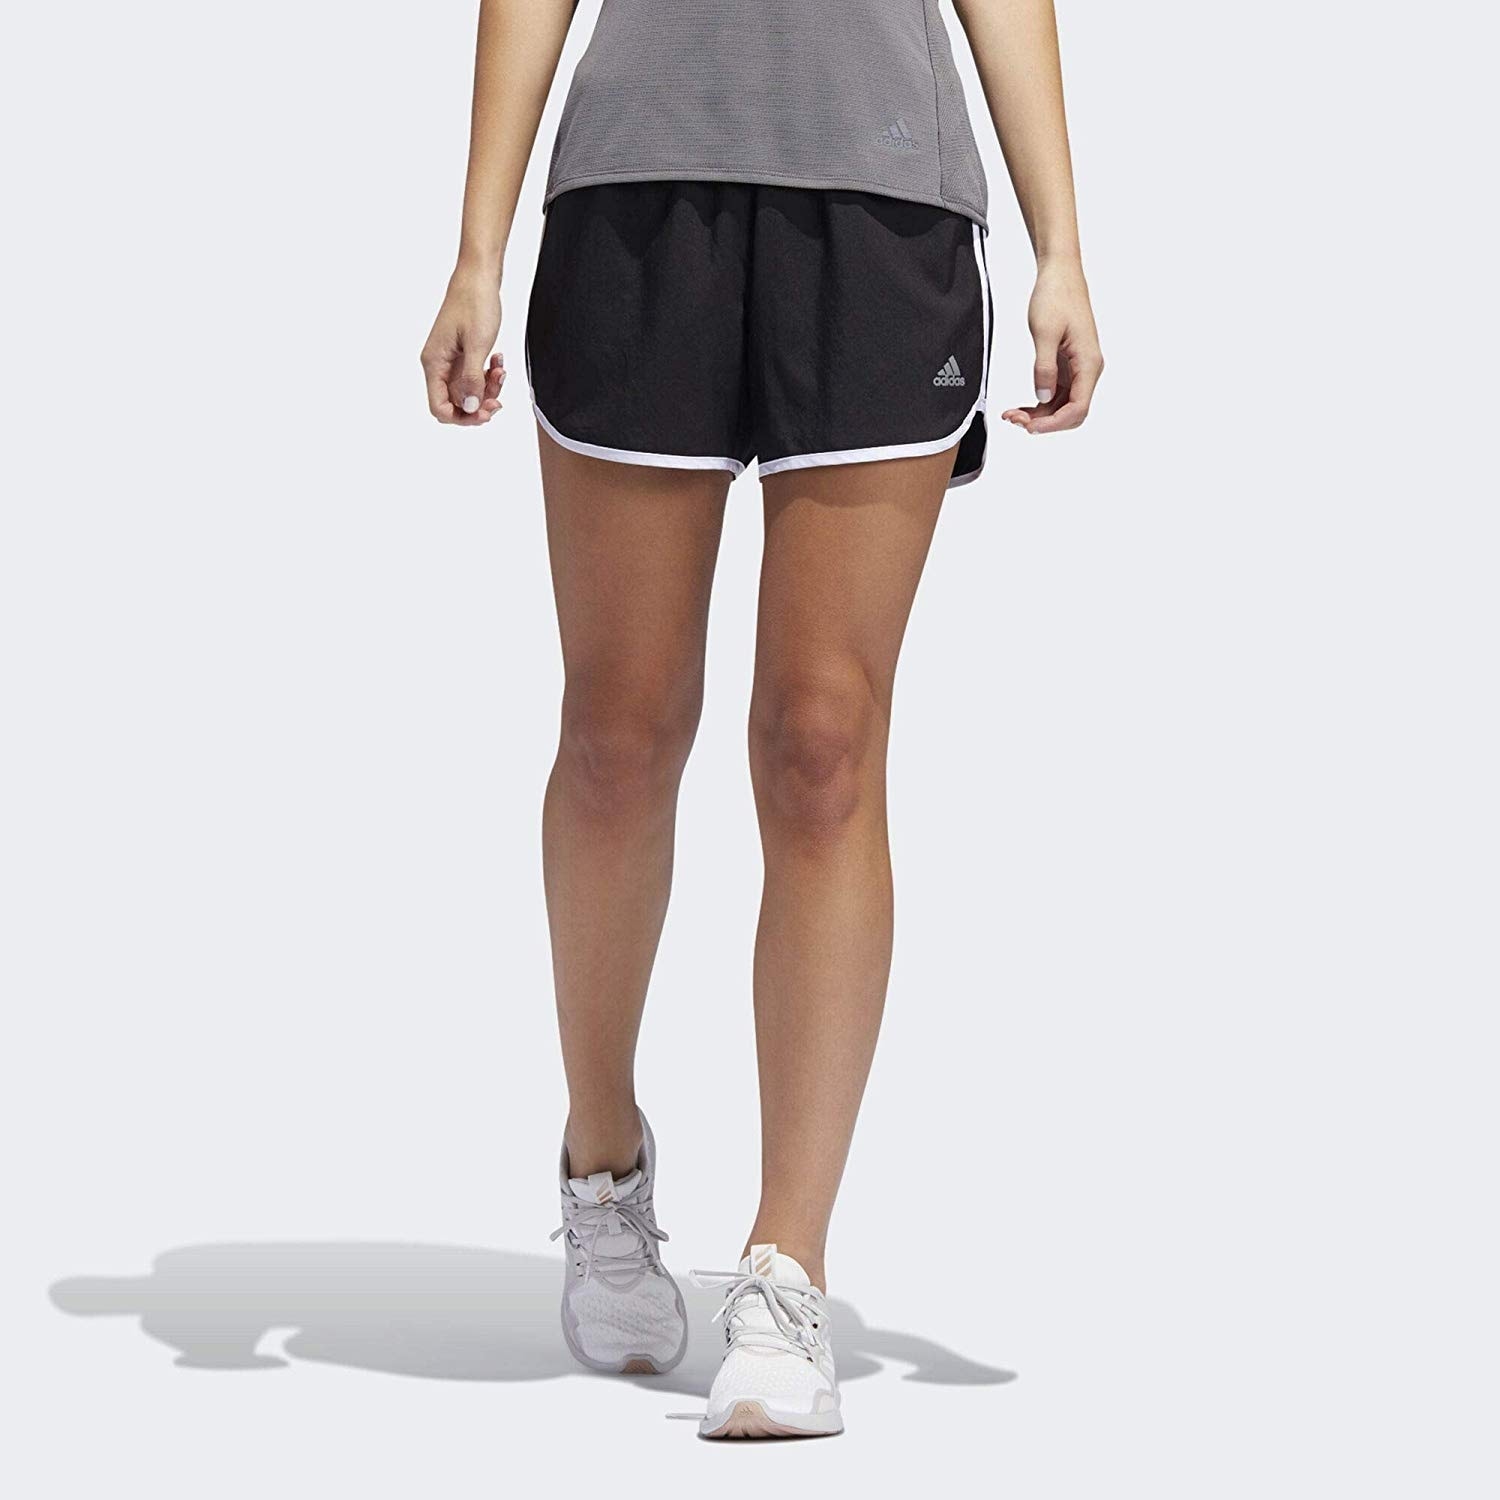 adidas Women's M20 Shorts, Black/White 